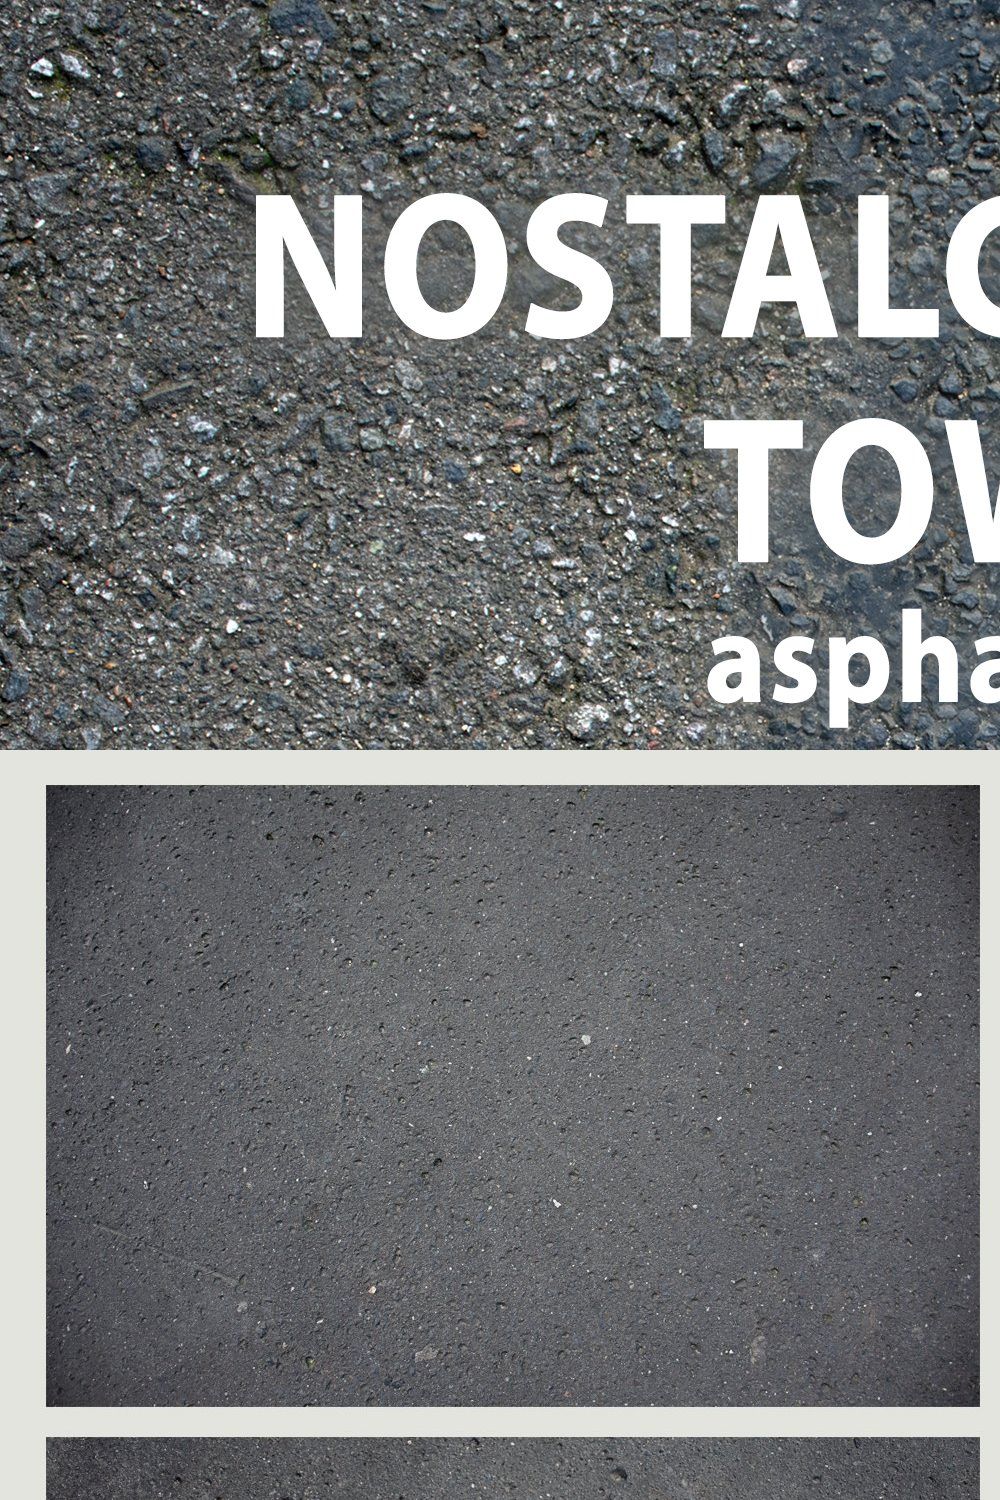 Nostalgic Town: Asphalt#1 pinterest preview image.